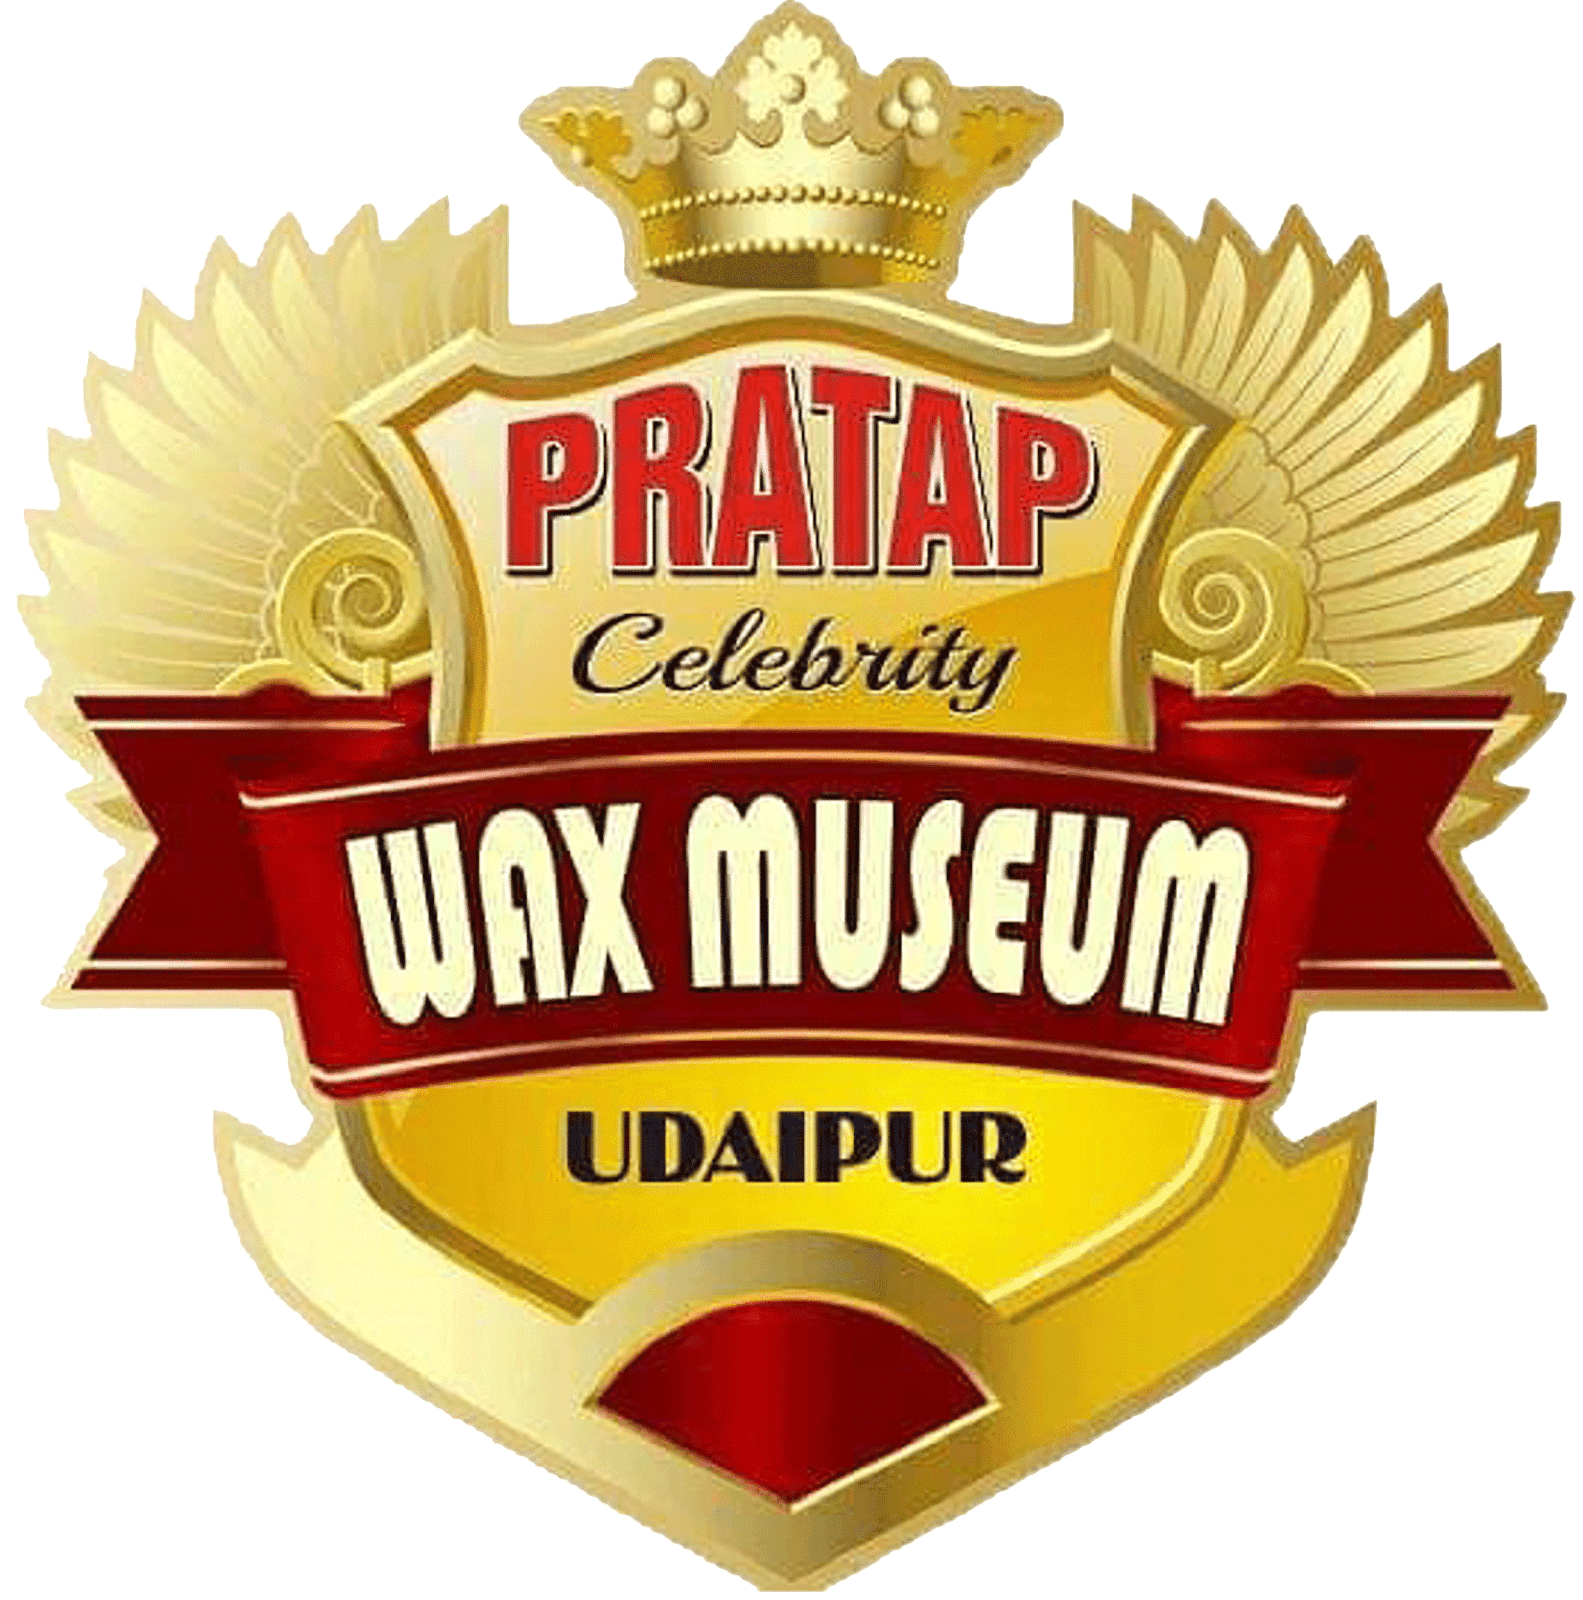 Wax Museum Udaipur